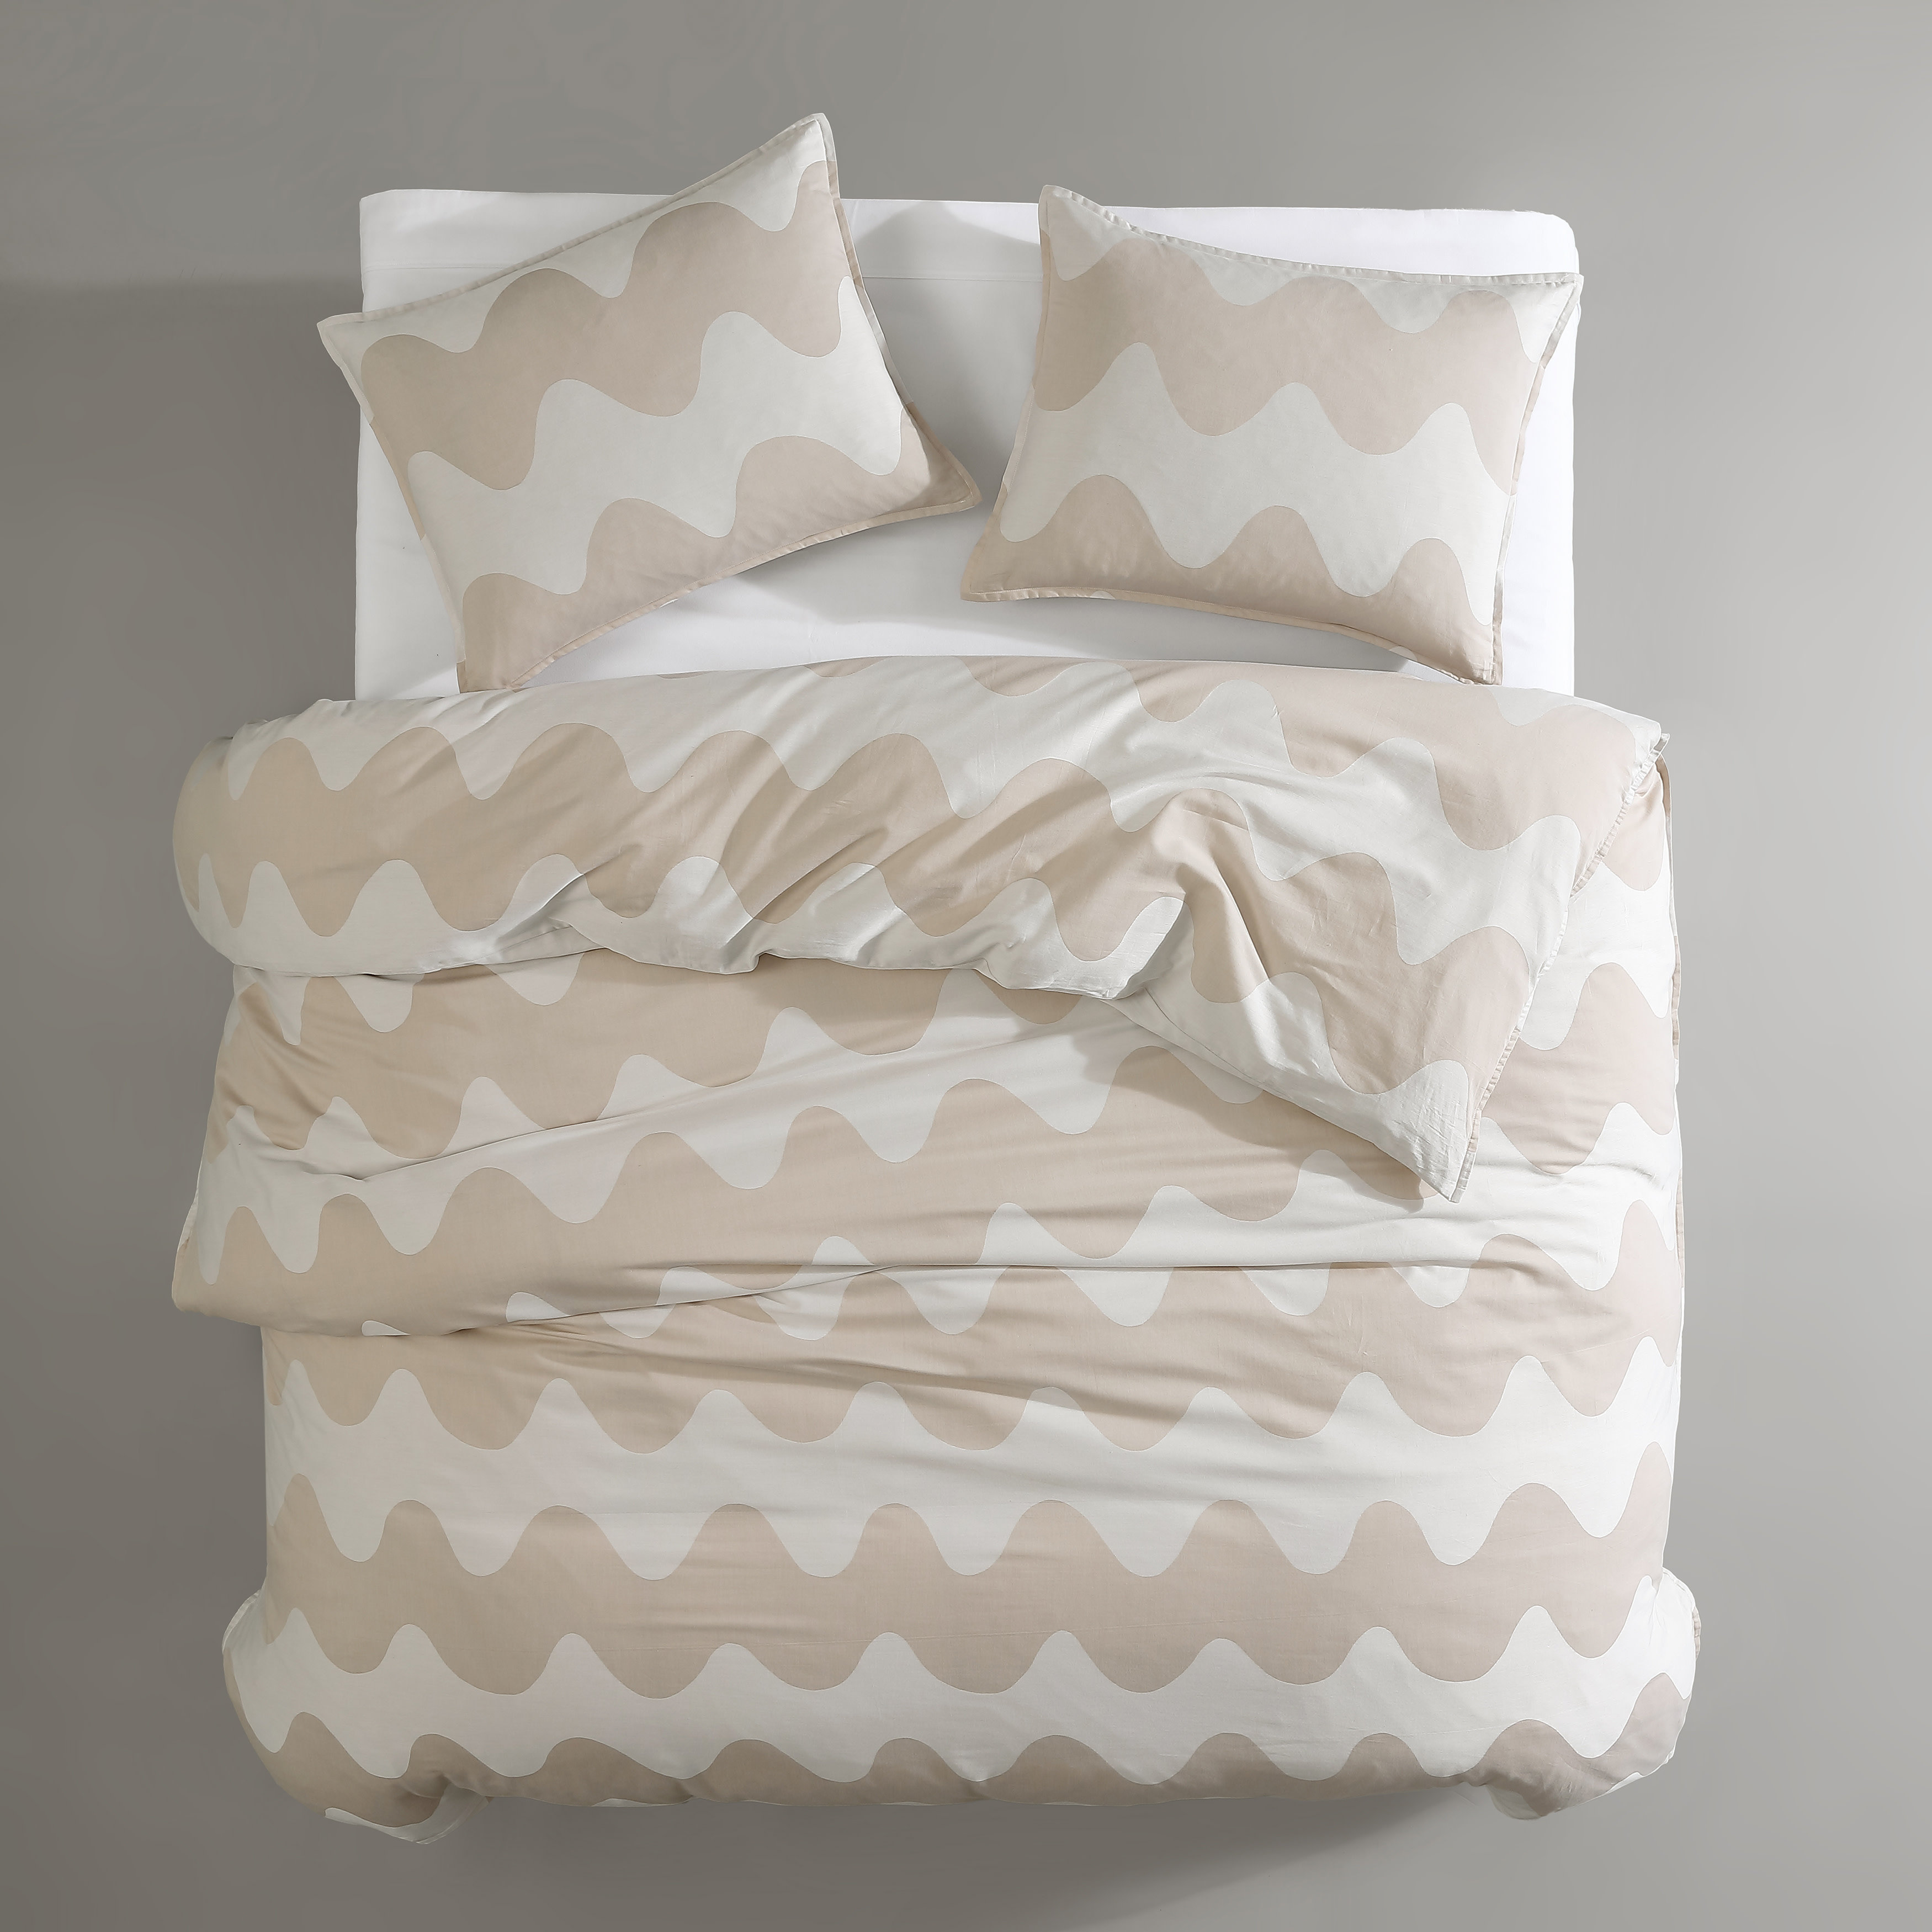 Shari Down Alternative Ultra Cozy Comforter and Duvet Cover Set